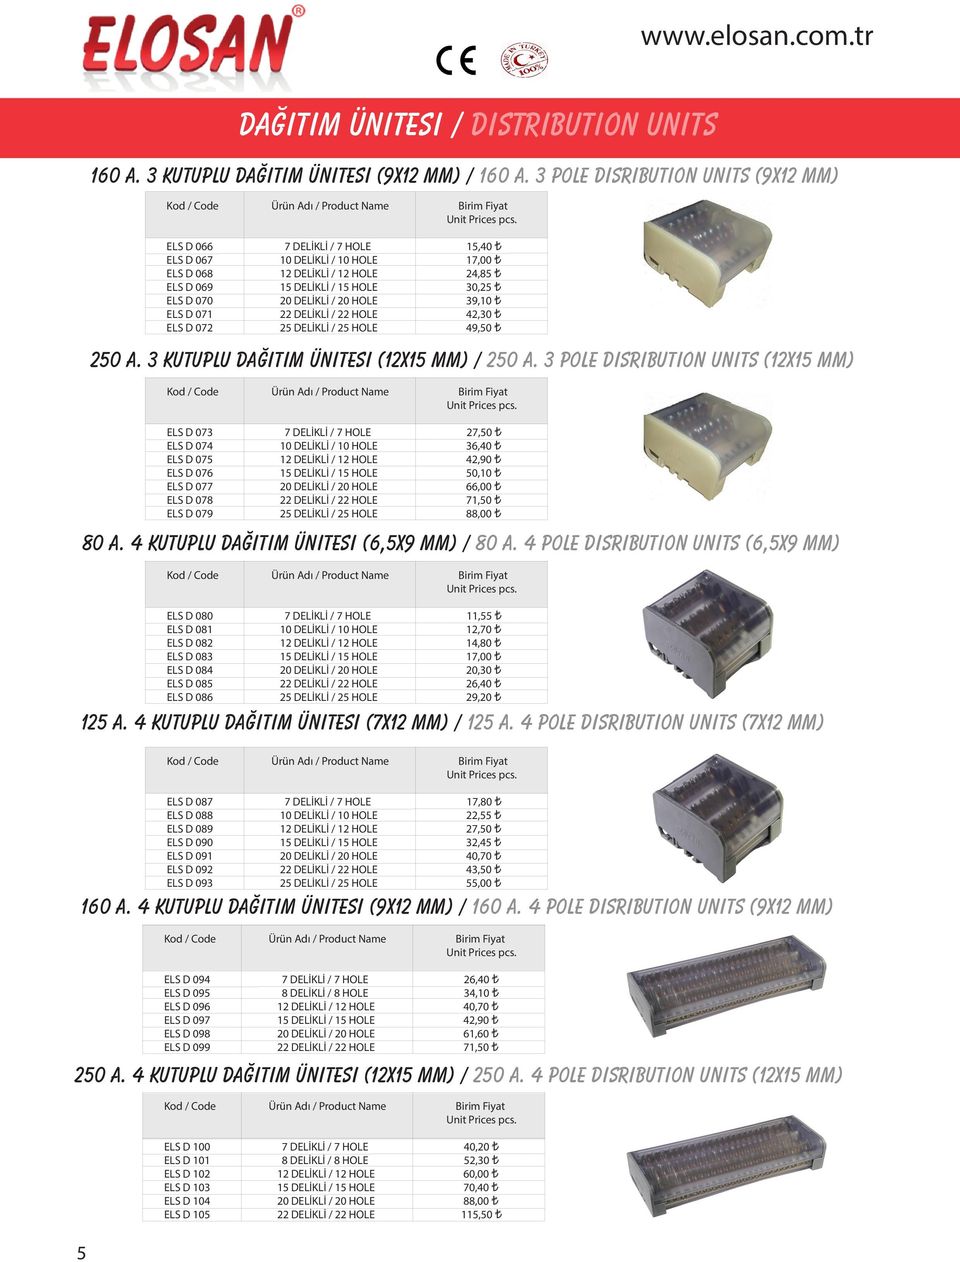 4 pole dısrıbutıon unıts (7x12 mm) 160 a. 4 kutuplu dağıtım ünitesi (9x12 mm) / 160 a. 4 pole dısrıbutıon unıts (9x12 mm) 250 a. 4 kutuplu dağıtım ünitesi (12x15 mm) / 250 a.